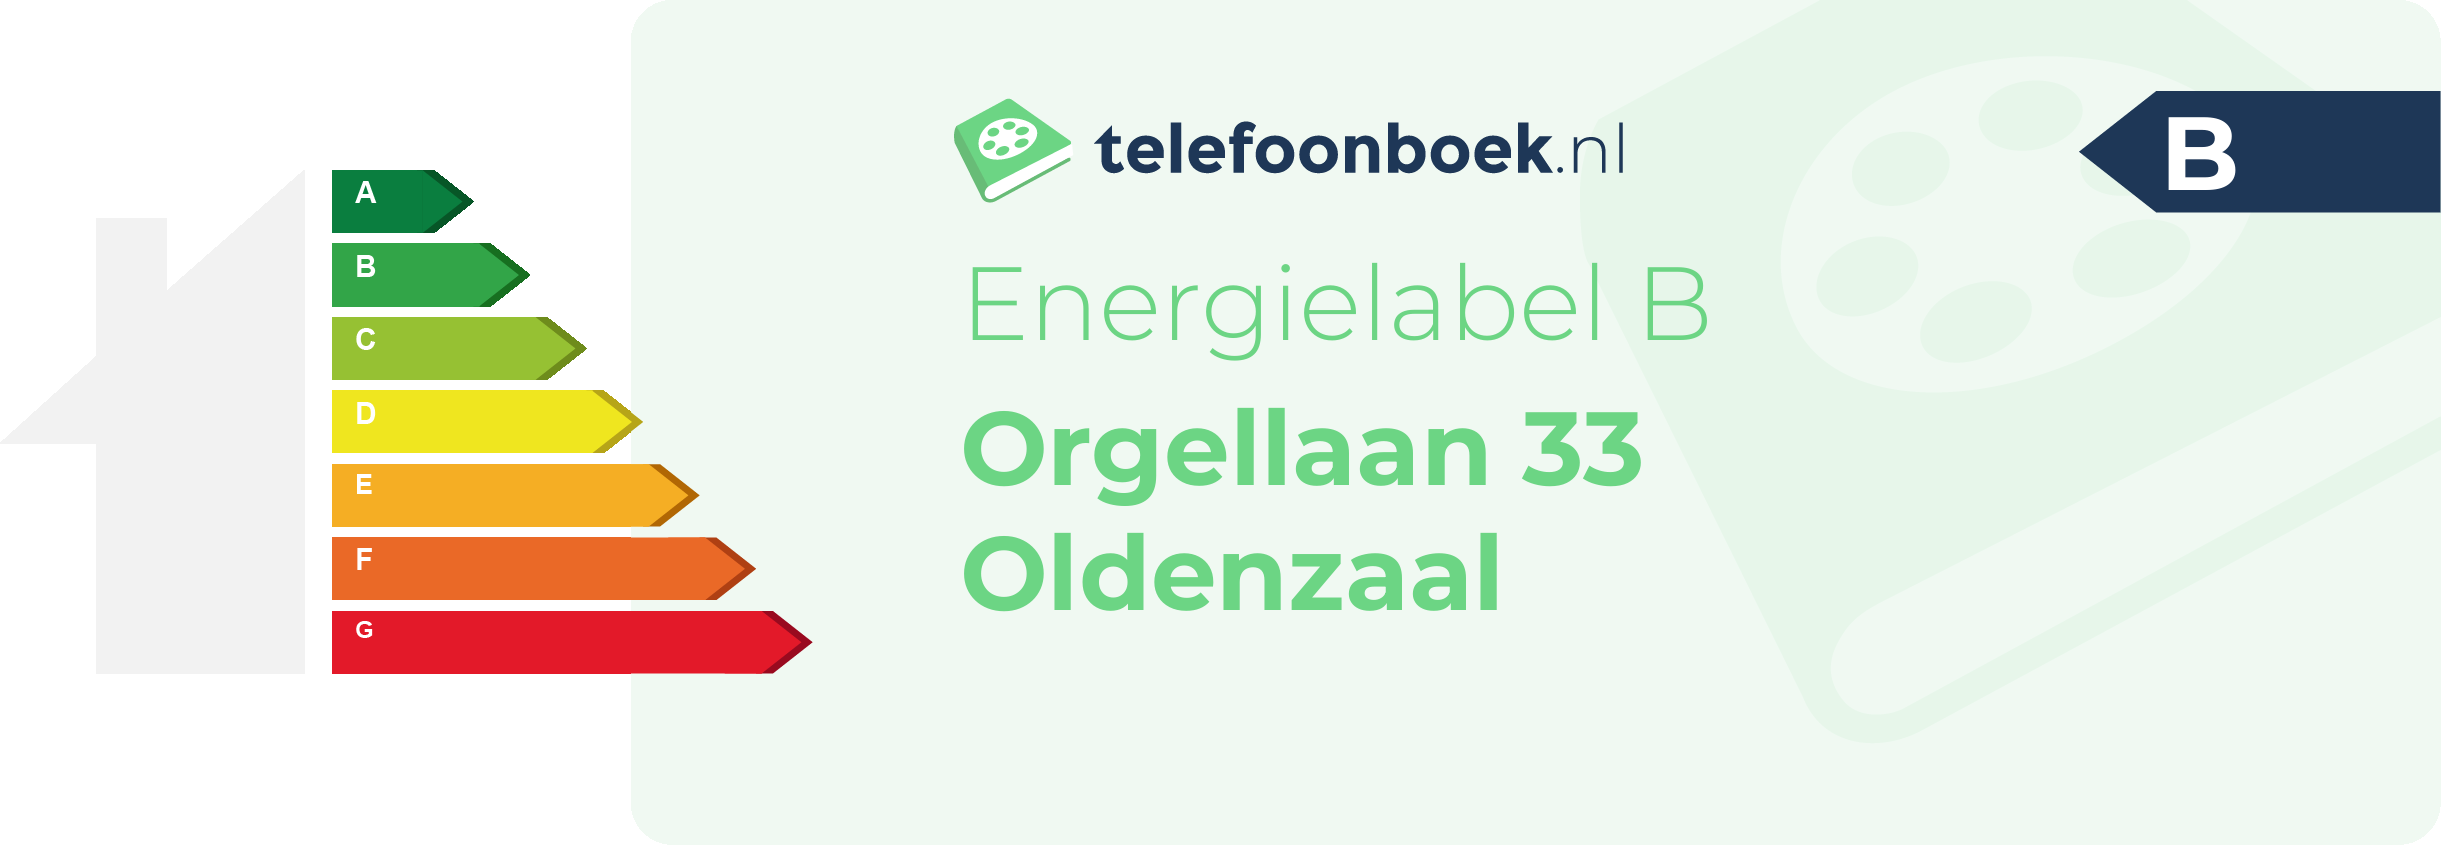 Energielabel Orgellaan 33 Oldenzaal